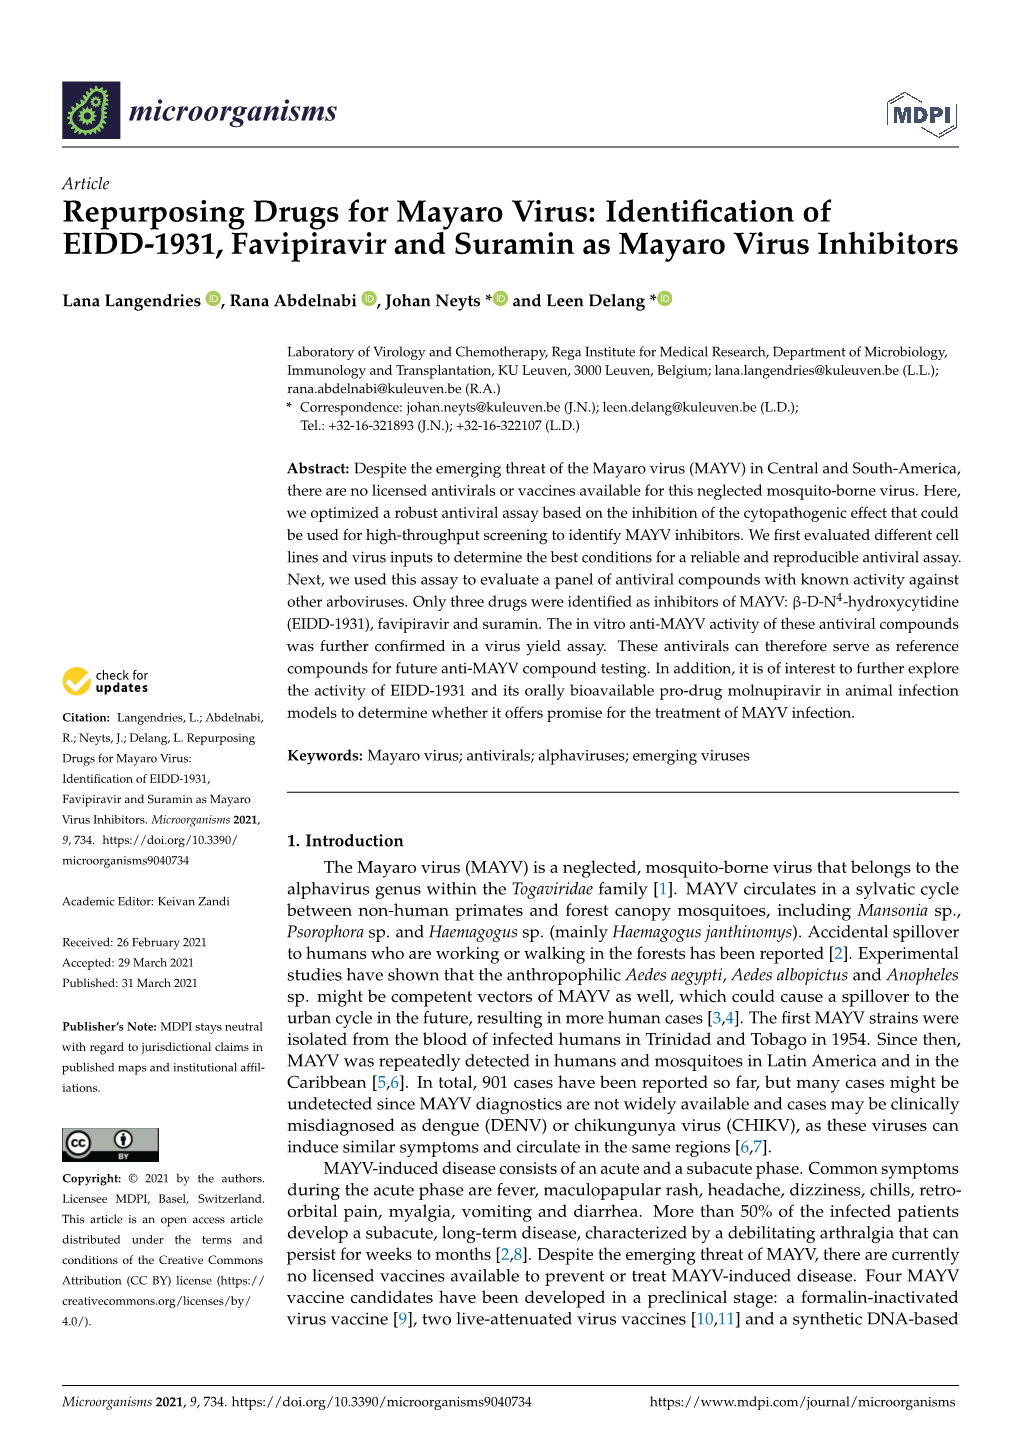 Identification of EIDD-1931, Favipiravir and Suramin As Mayaro Virus